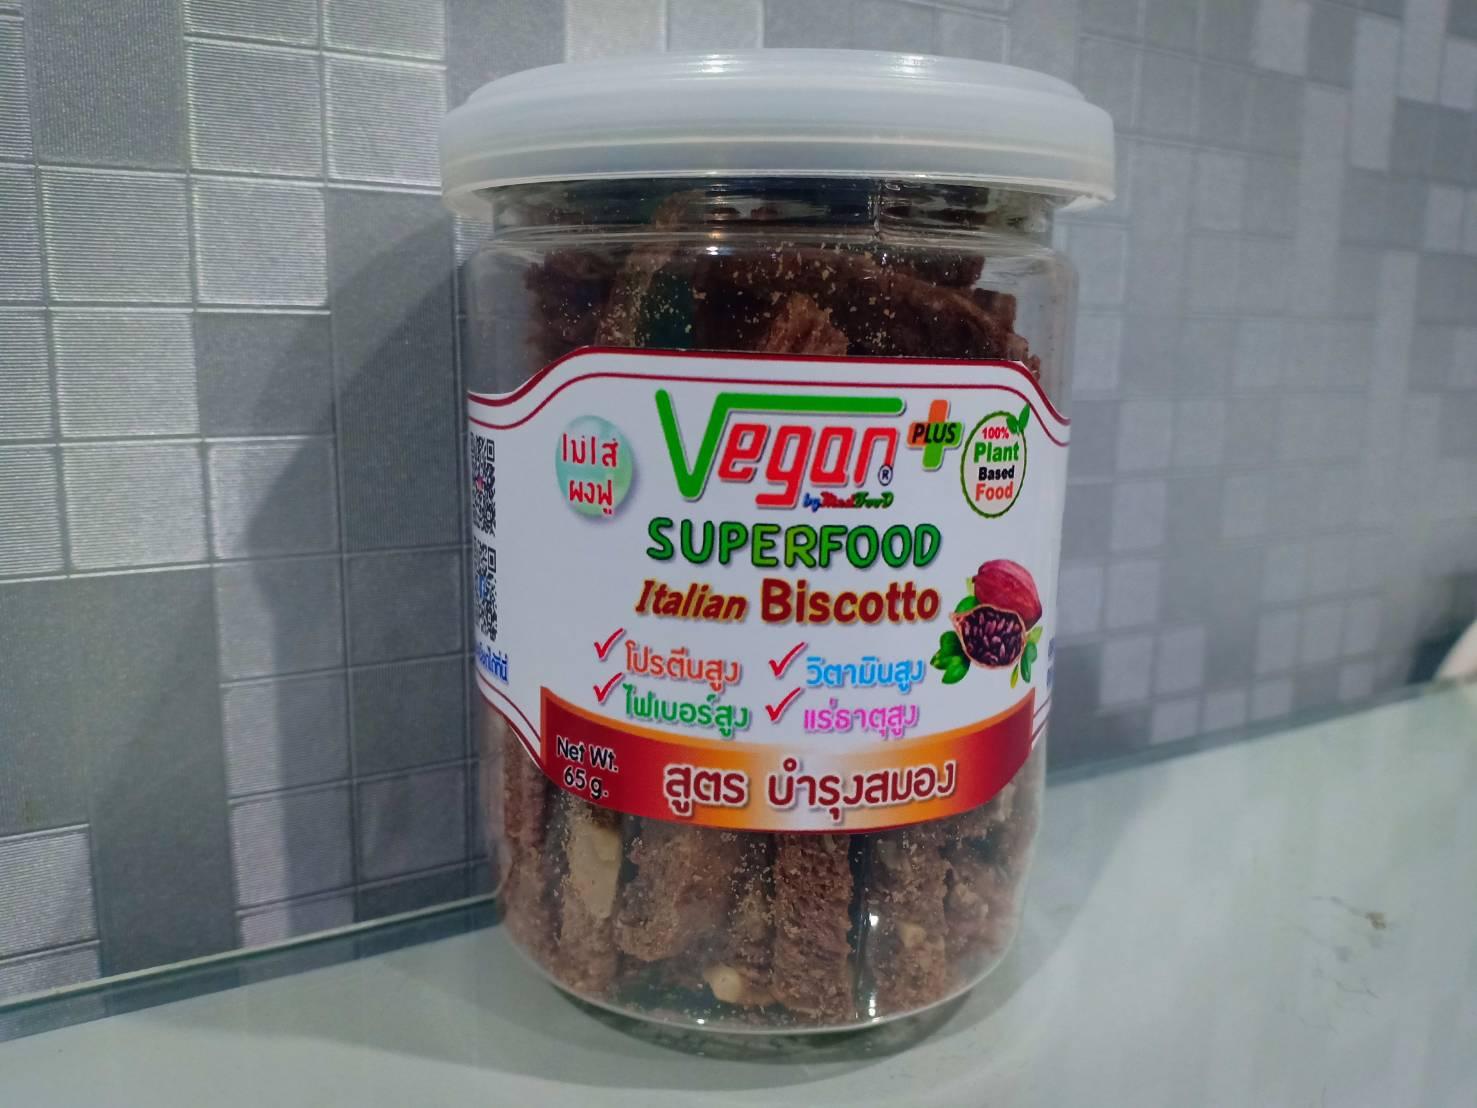 Super Food Biscotto สูตรบำรุงสมอง ขนาด 65 กรัม #เจ #มังสวิรัติ #วีแกน #Vegan #SuperFood